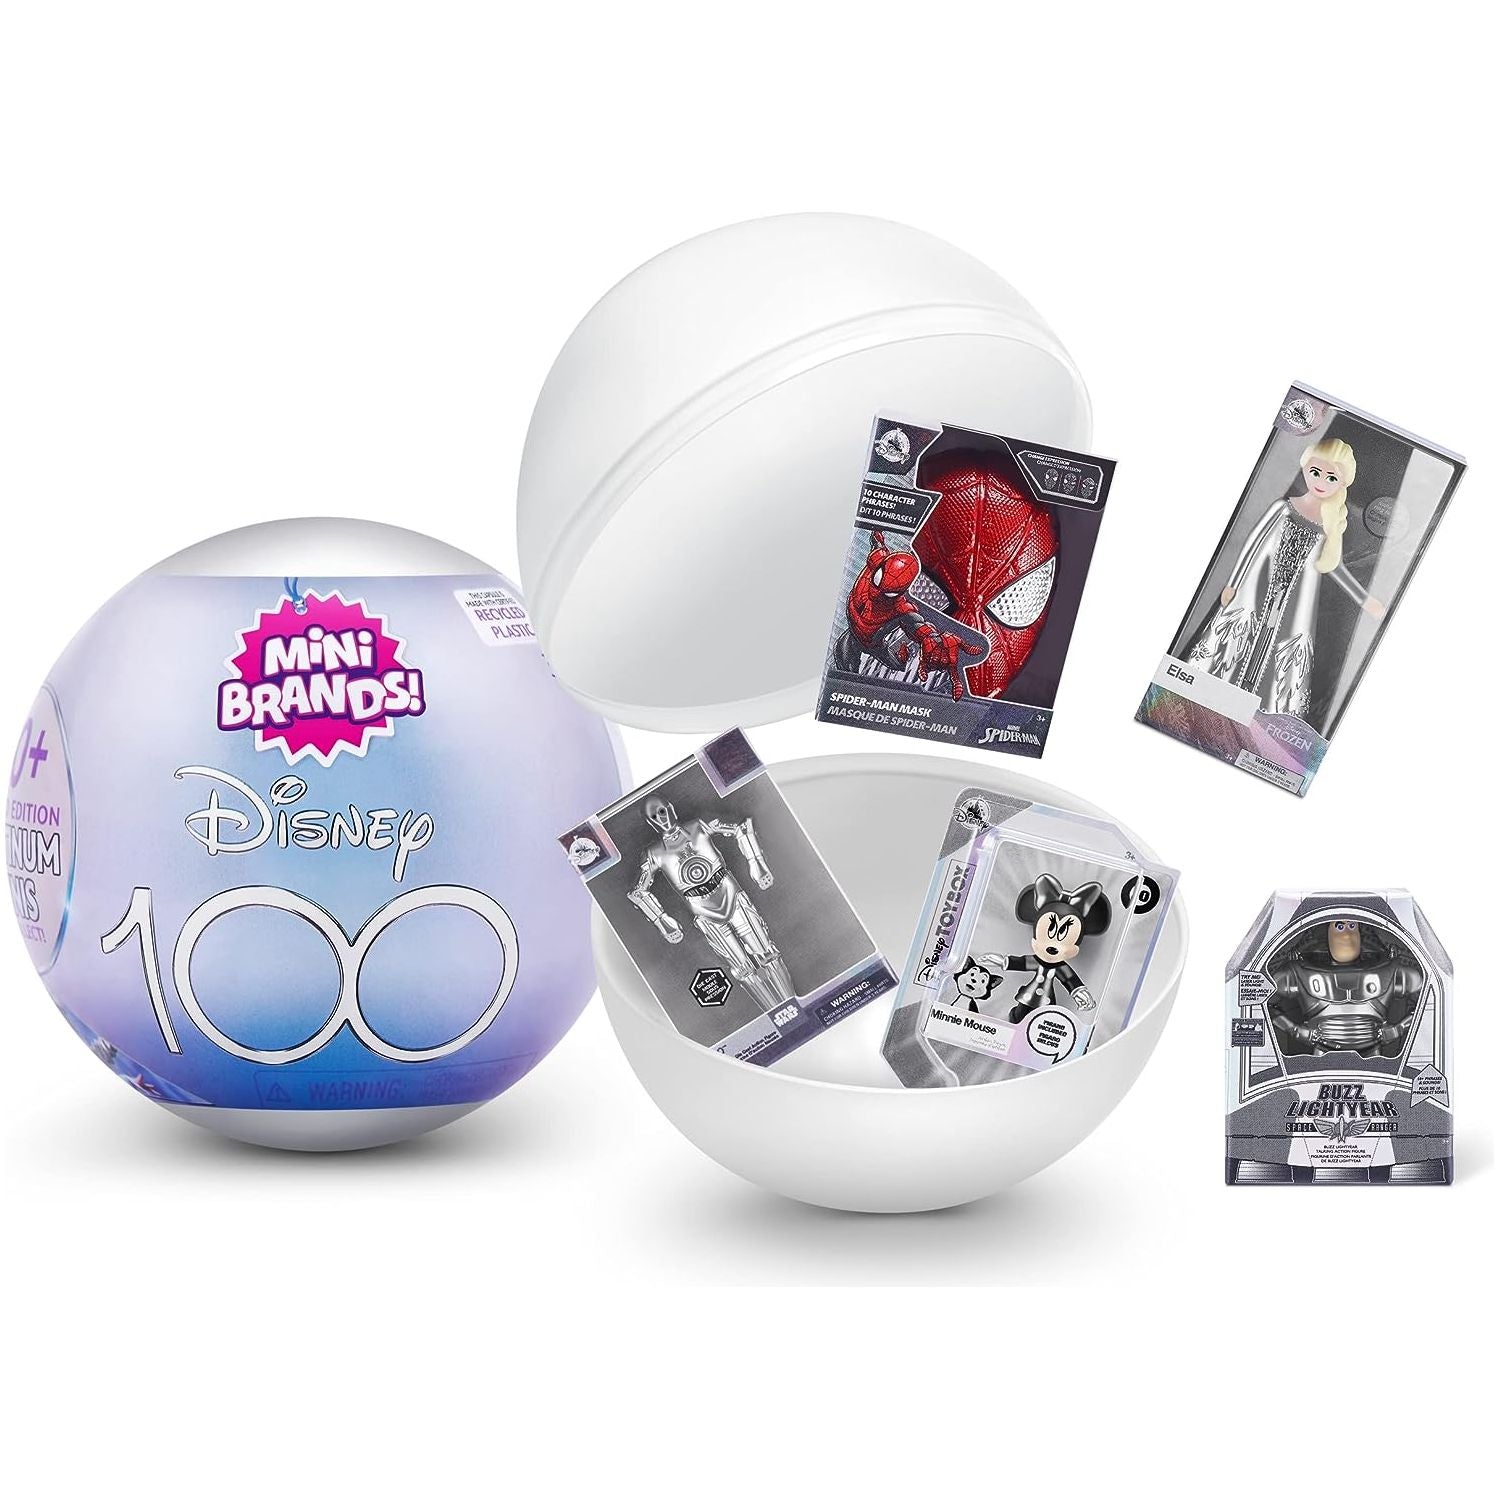 Mini Brands Disney 100 Platinum Capsule by ZURU Limited Edition with Platinum Minis, Celebrate Disney 100